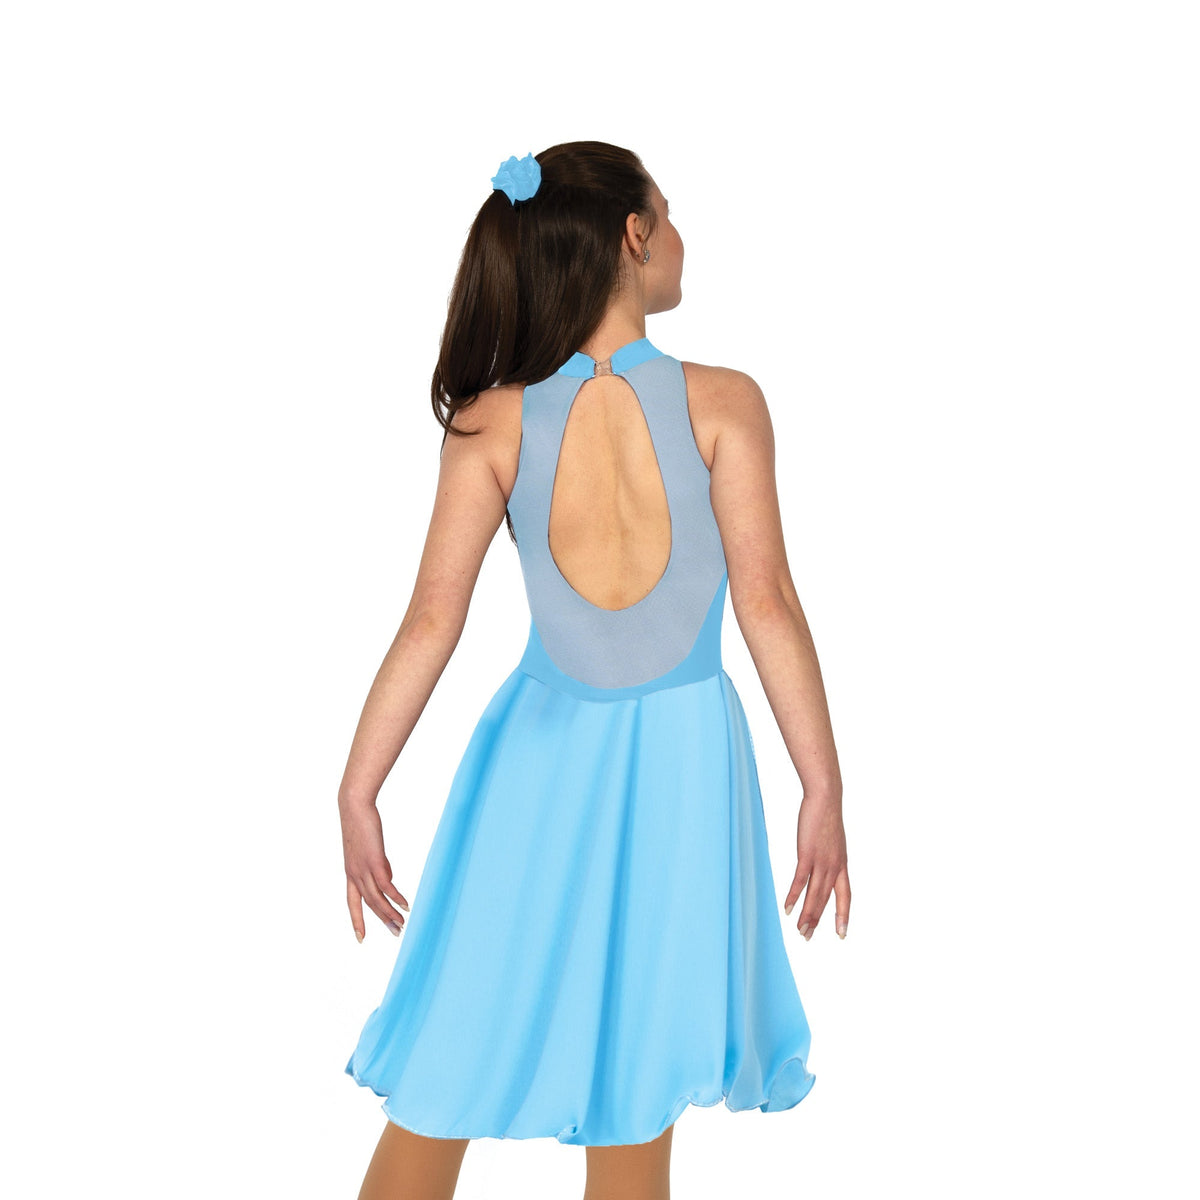 Keyhole Dance Dress Unembellished: Crystal Blue